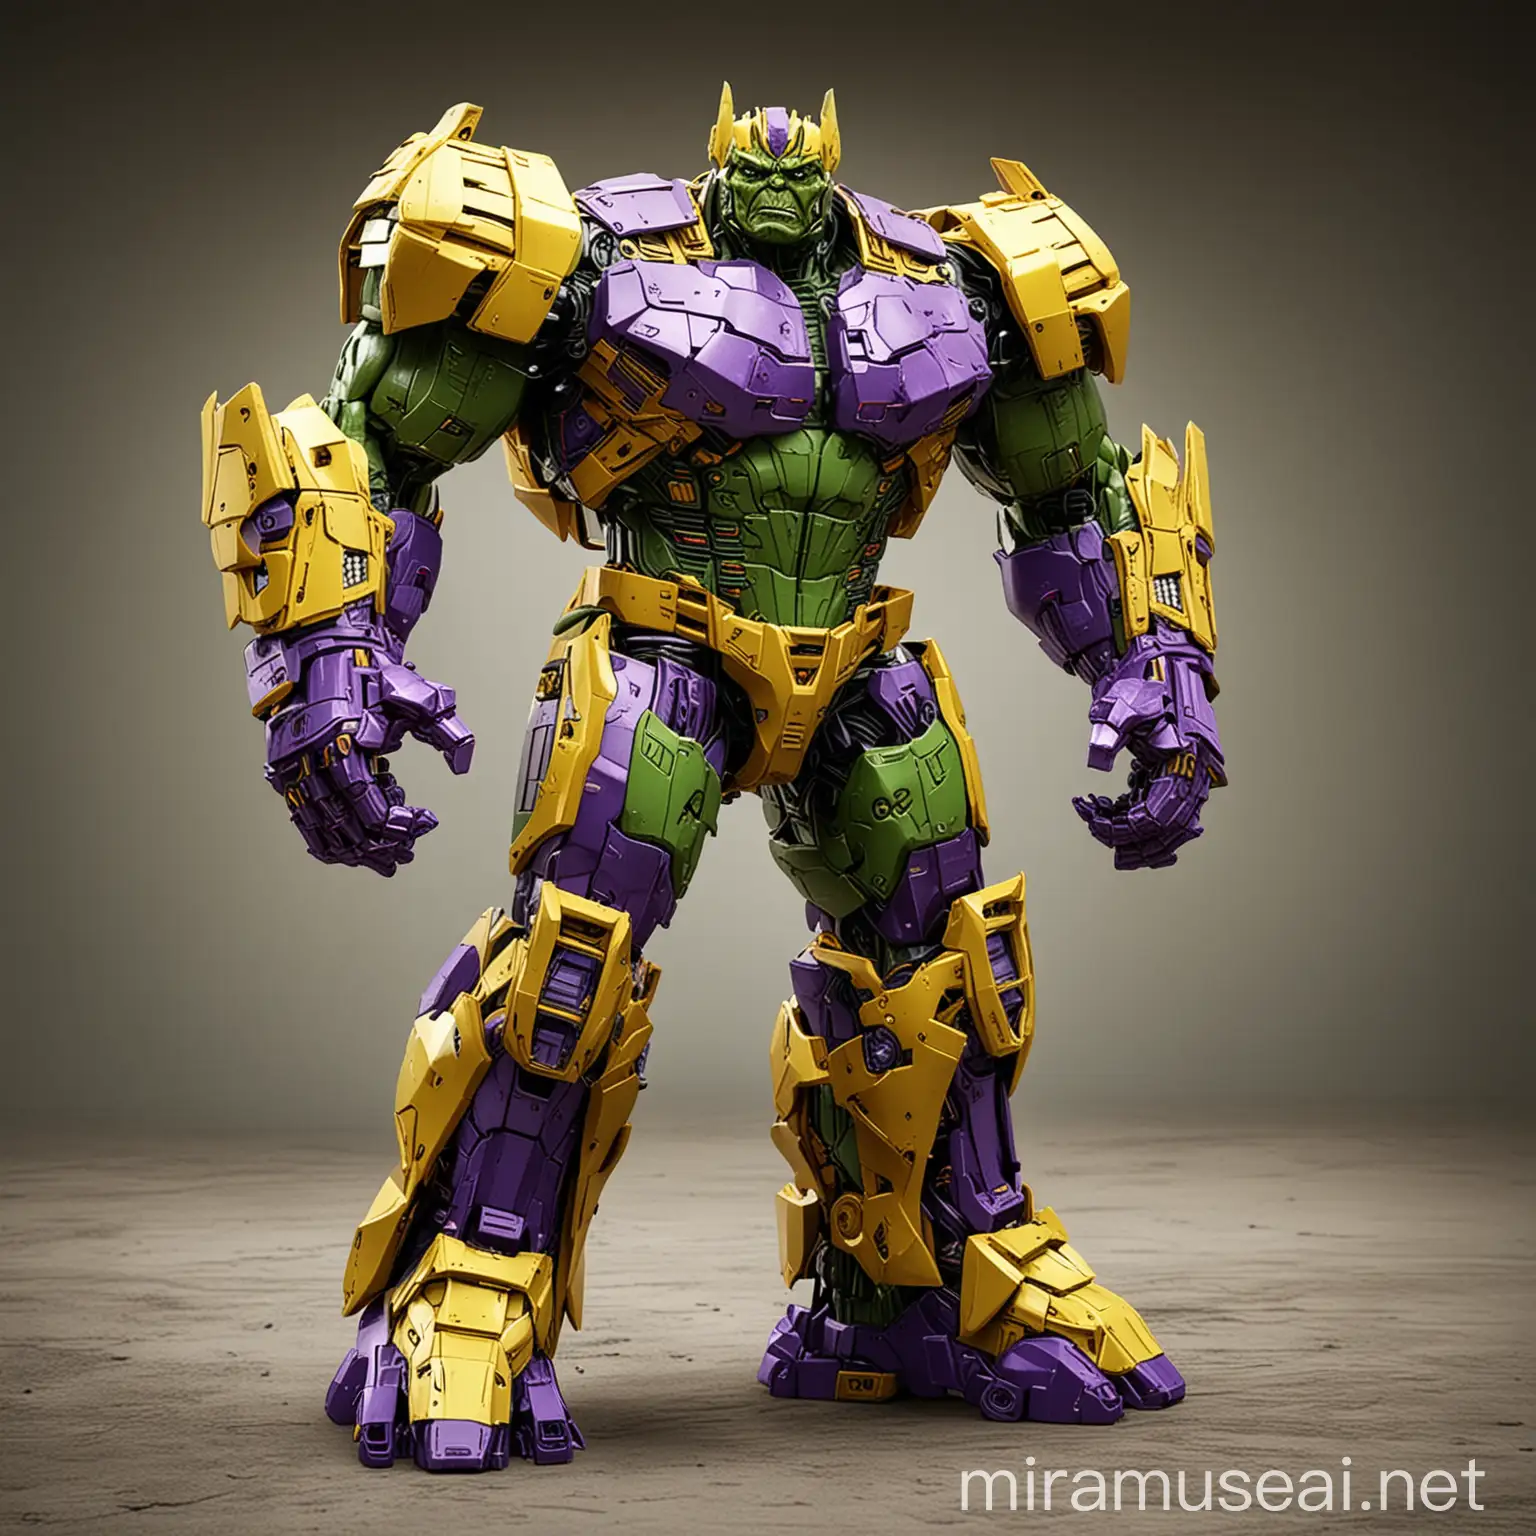 Hulk Transformer Powerful Green Giant Transforms into YellowGreen and Purple Machine